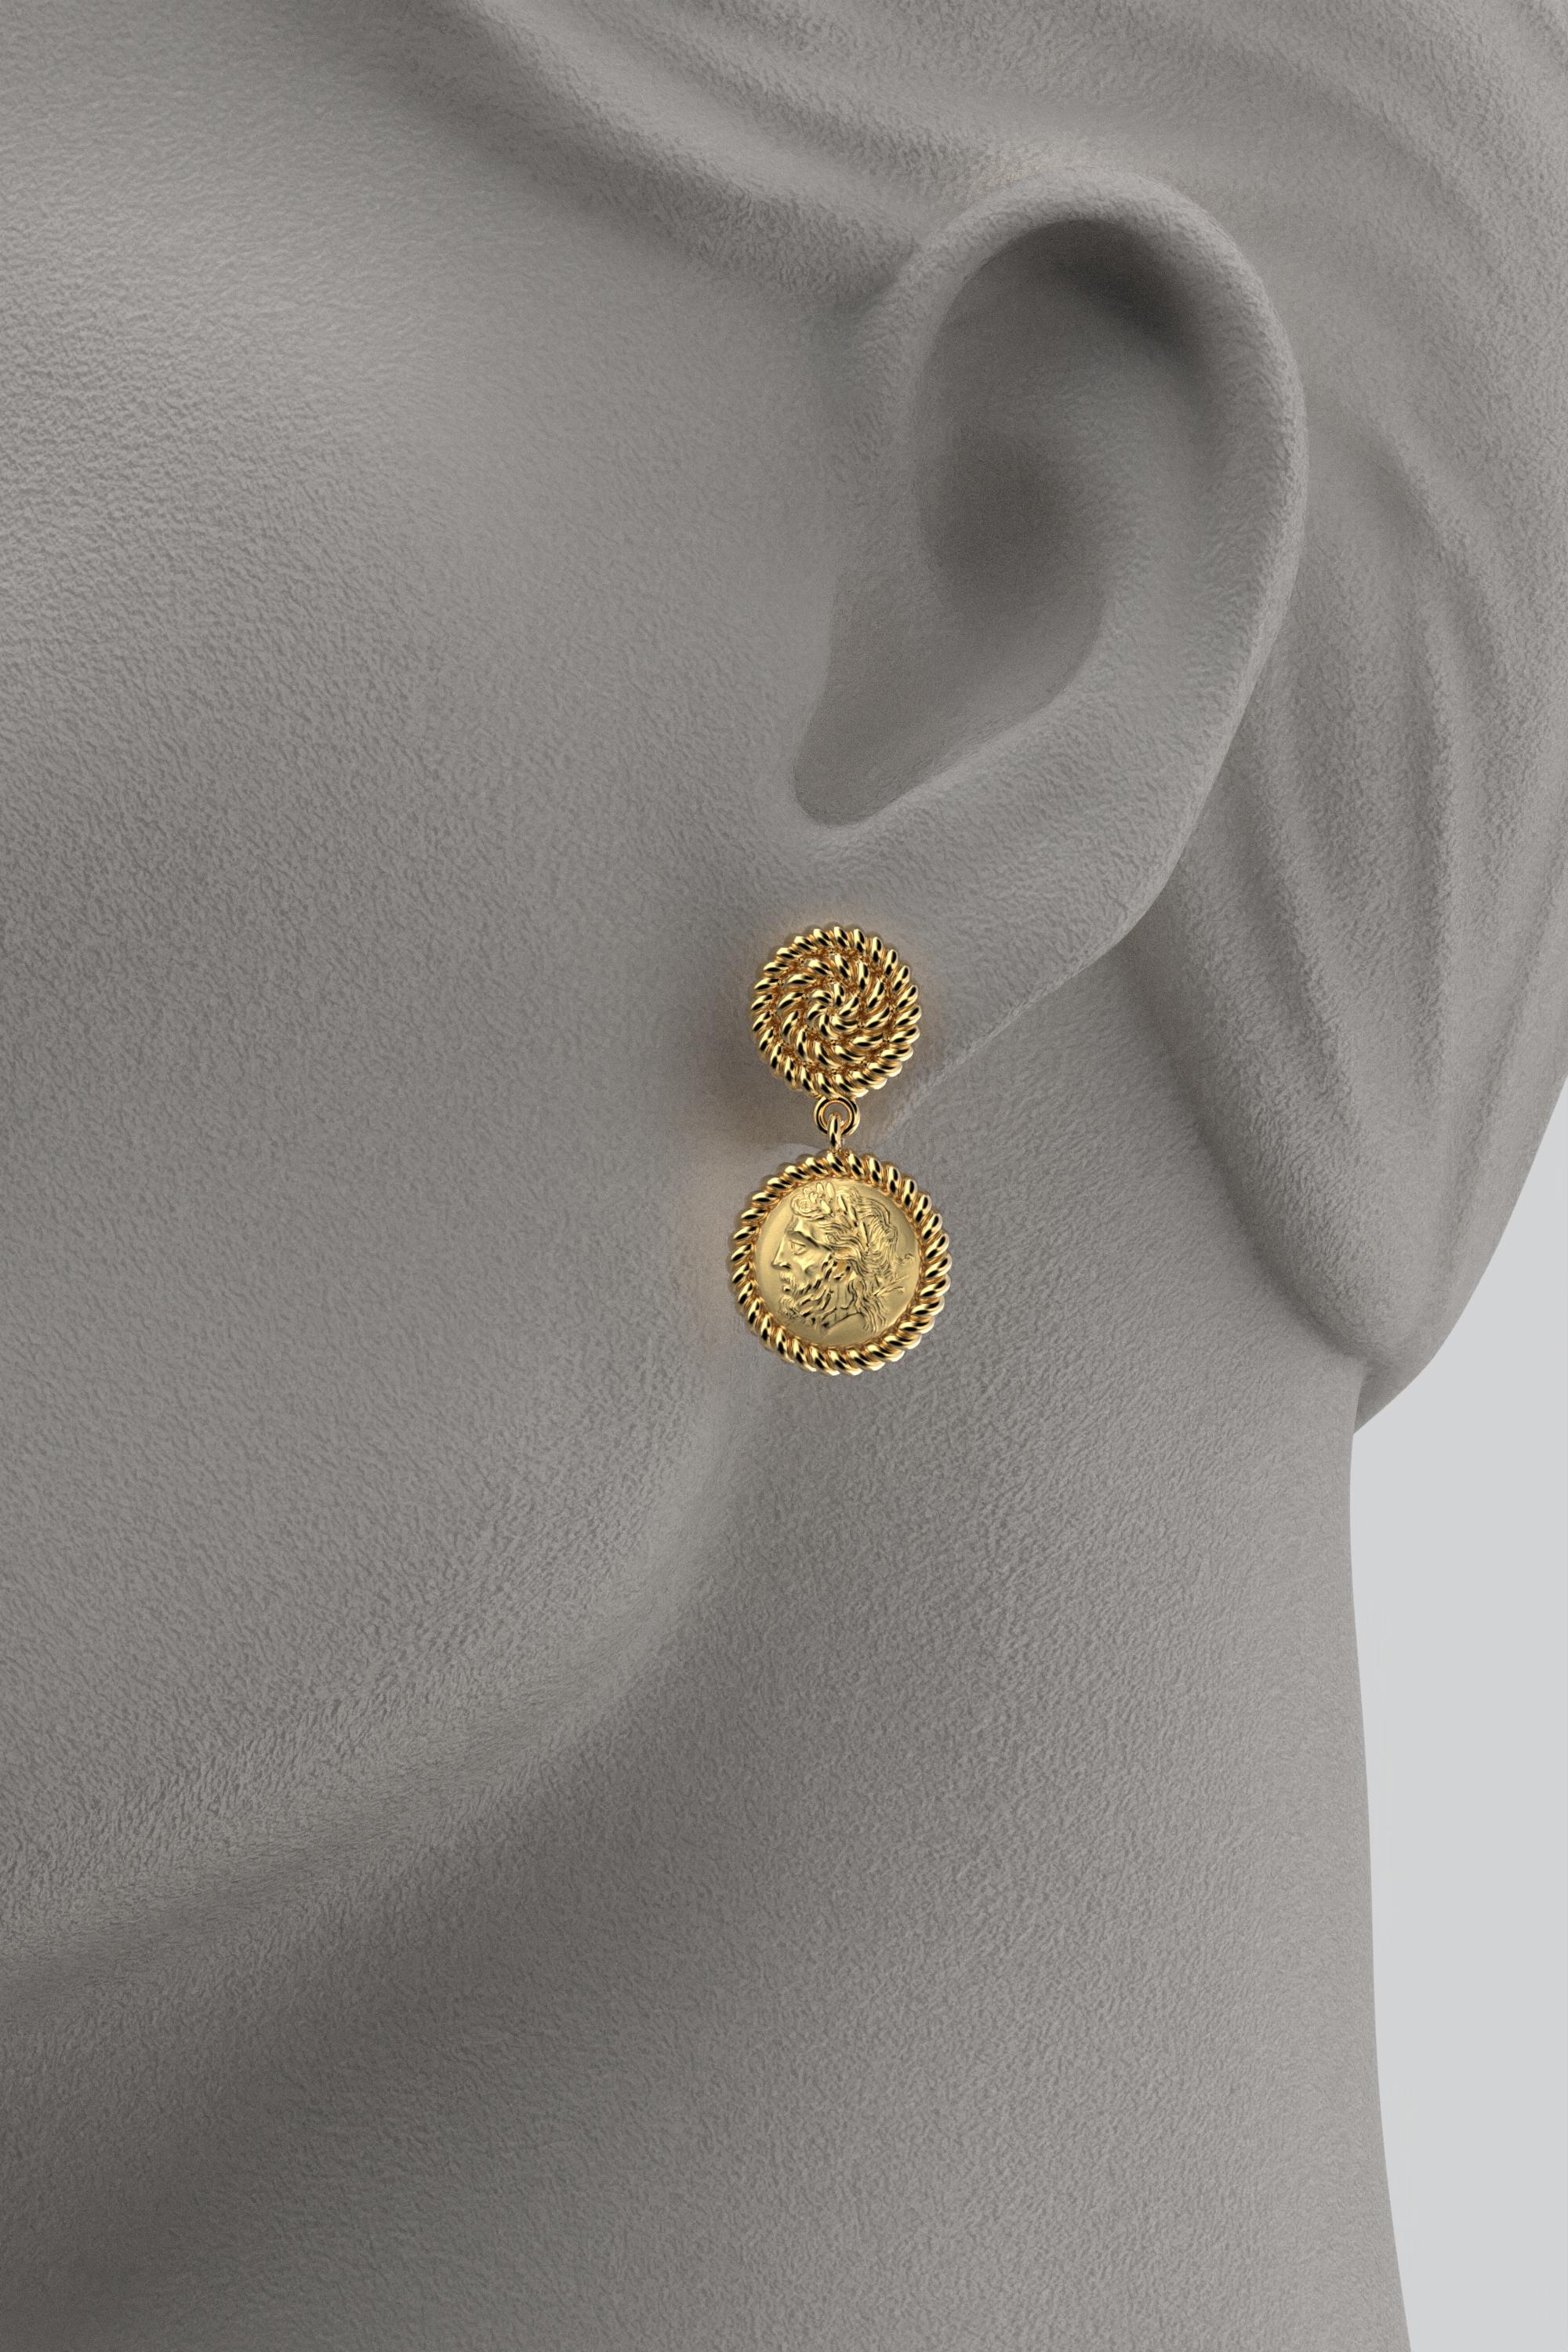 Dangle Earrings in 18k solid Gold, Ancient Greek Style, Zeus Coin Earrings For Sale 2